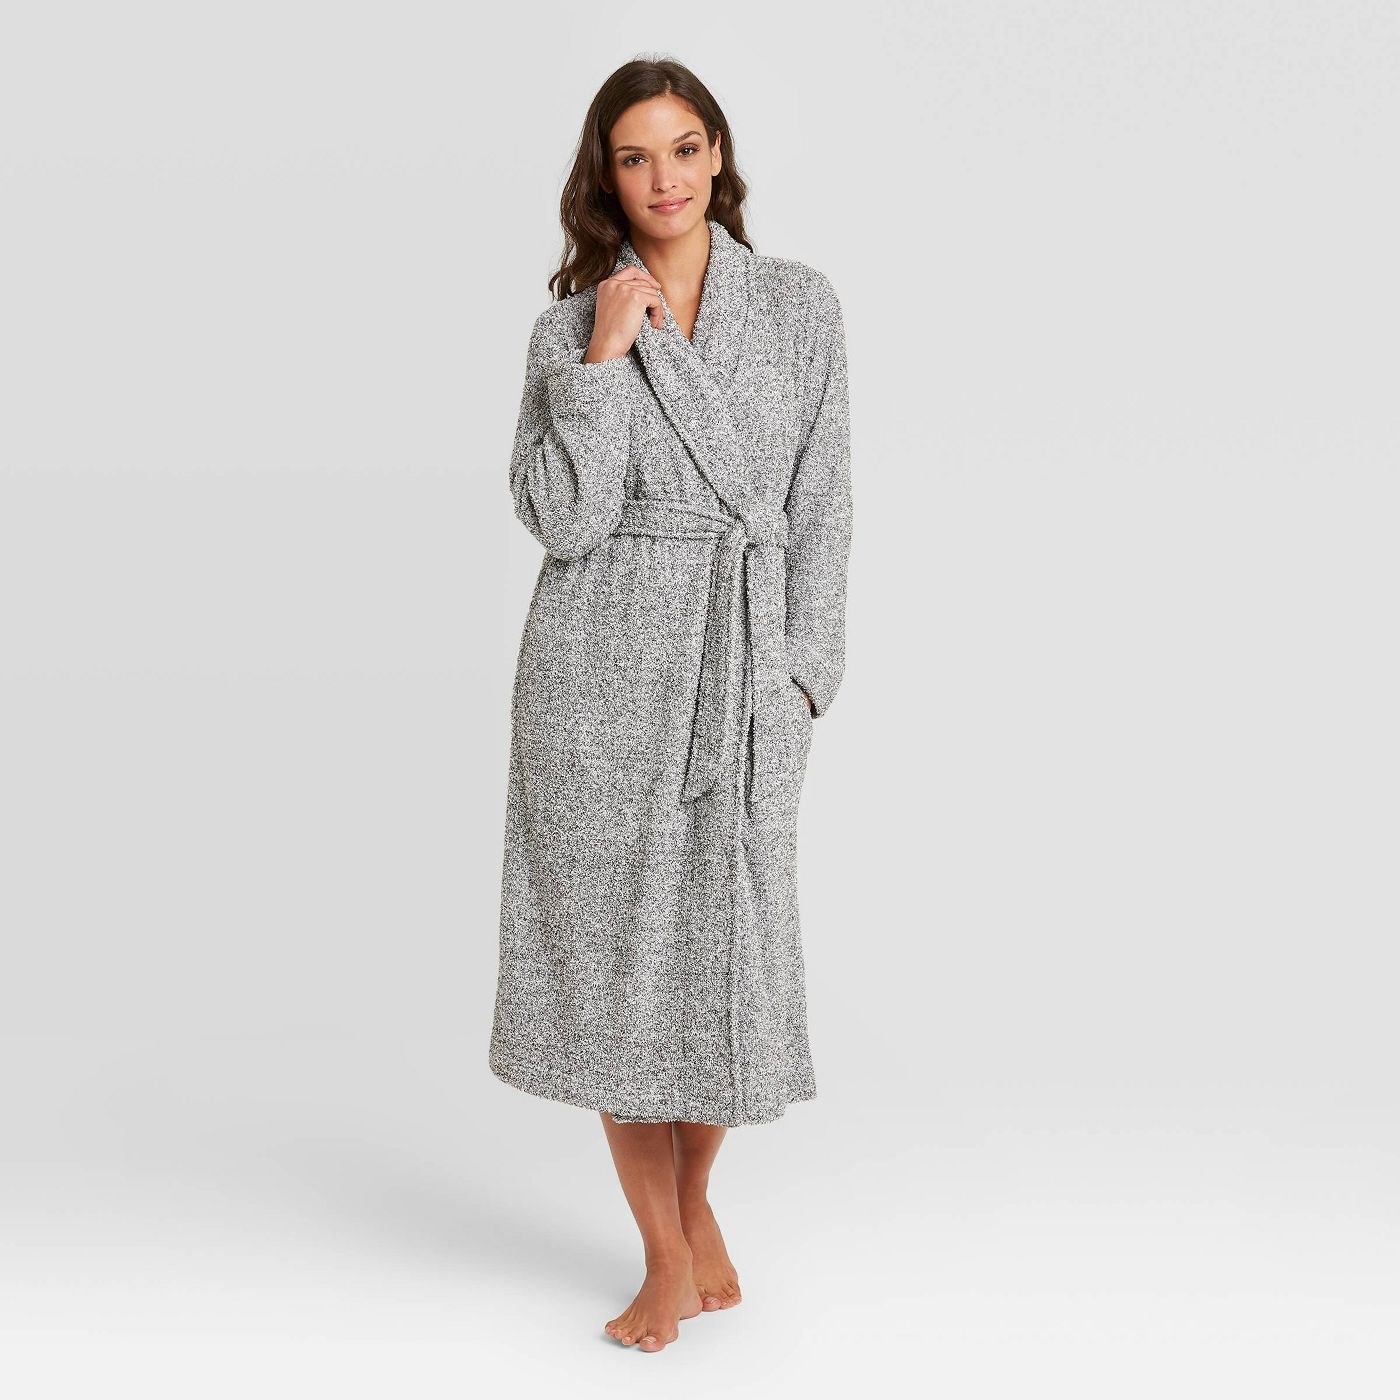 A model wearing a long grey chenille robe